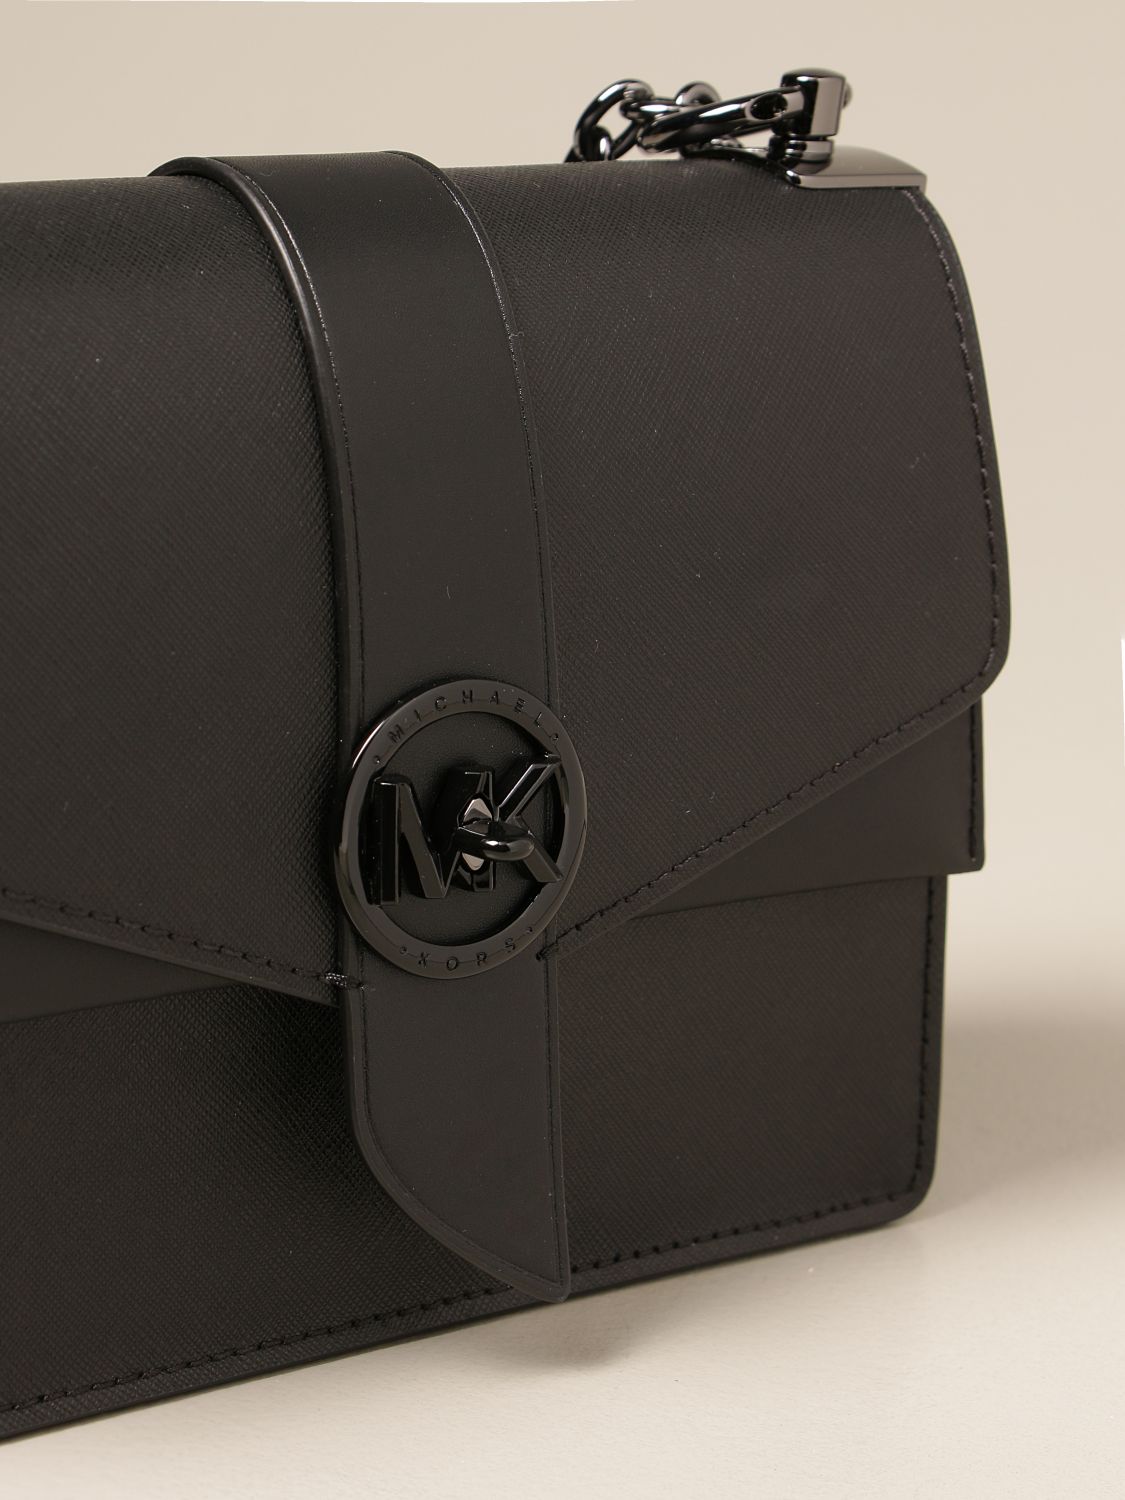 Michael Kors Greenwich Small Saffiano Leather Bag - Black